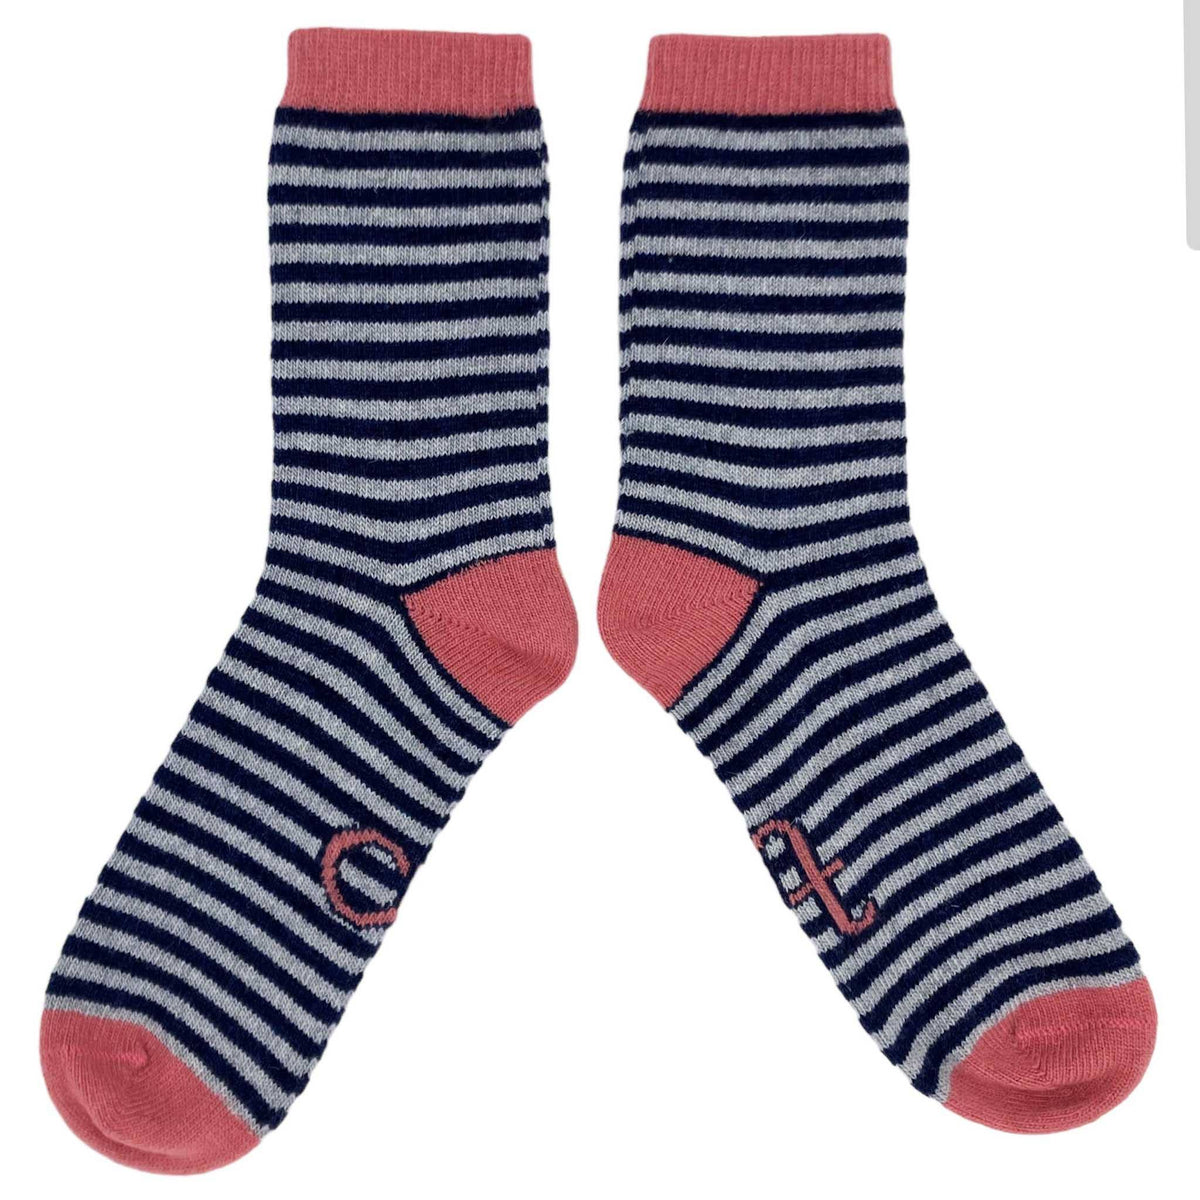 Women&#39;s Lambswool Ankle Socks: Leopard - pink/soft brown